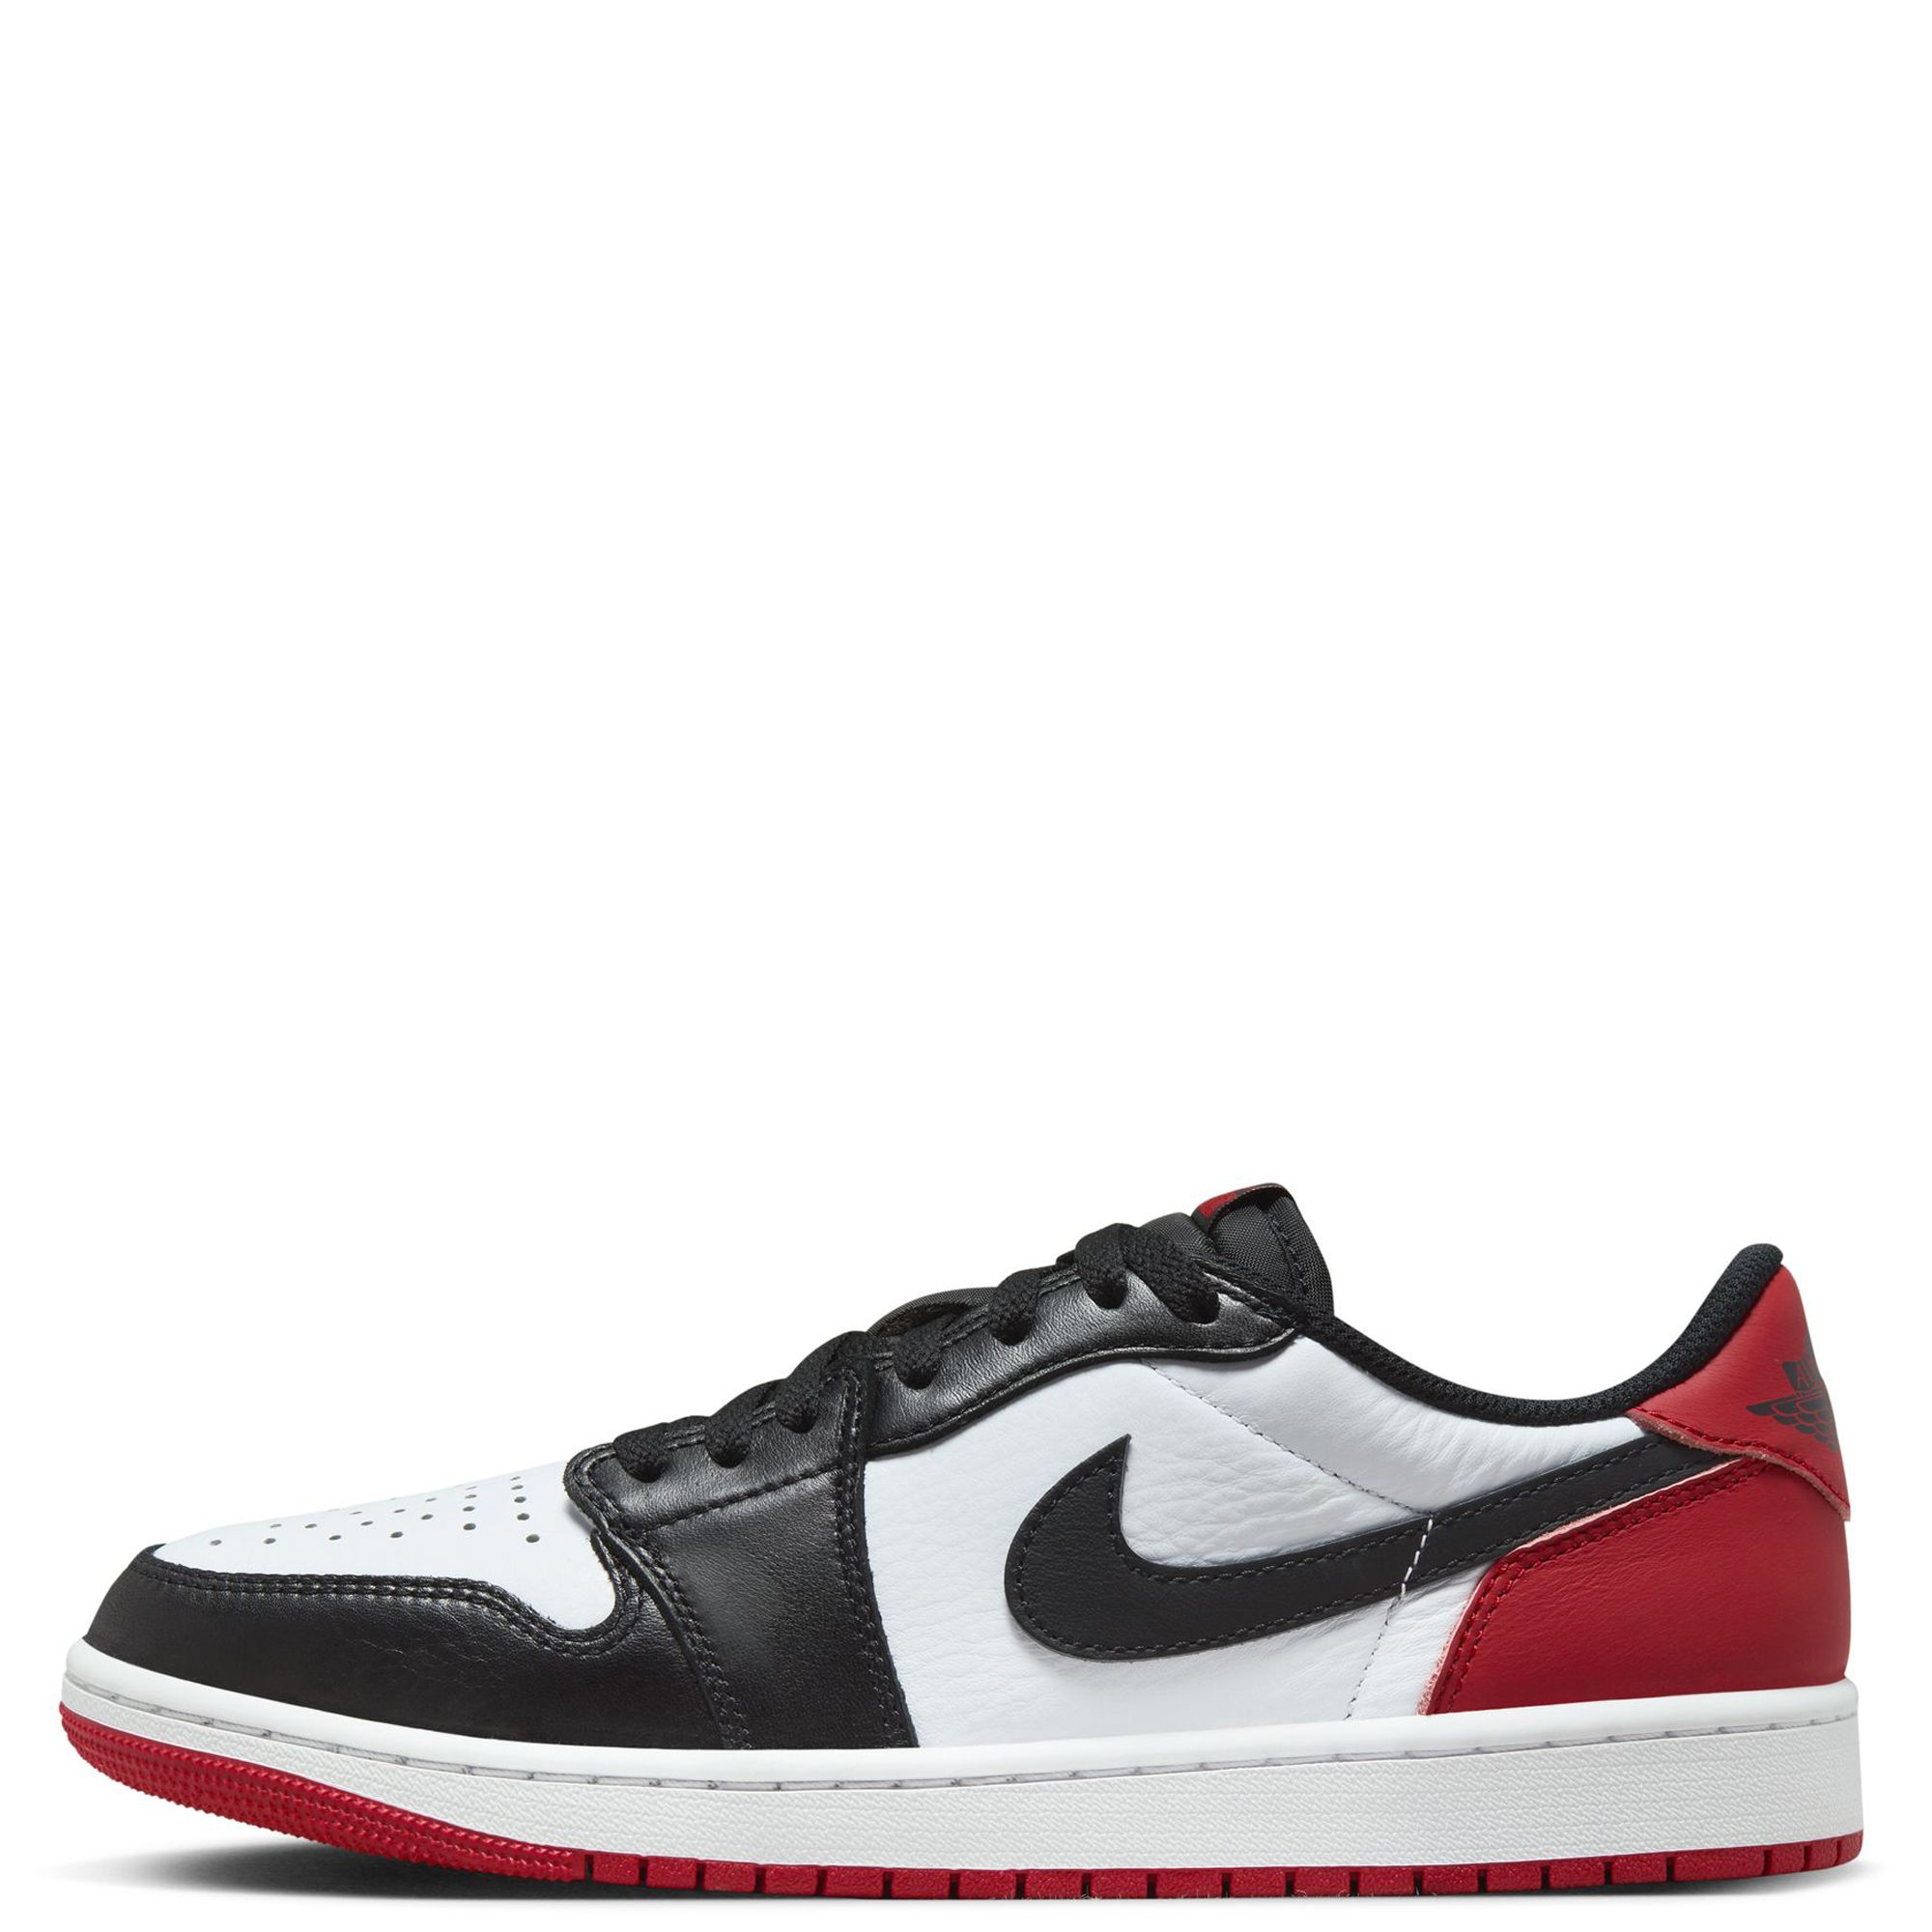 Nike Air Jordan 13 Low OG Pack | Size 13, Sneaker